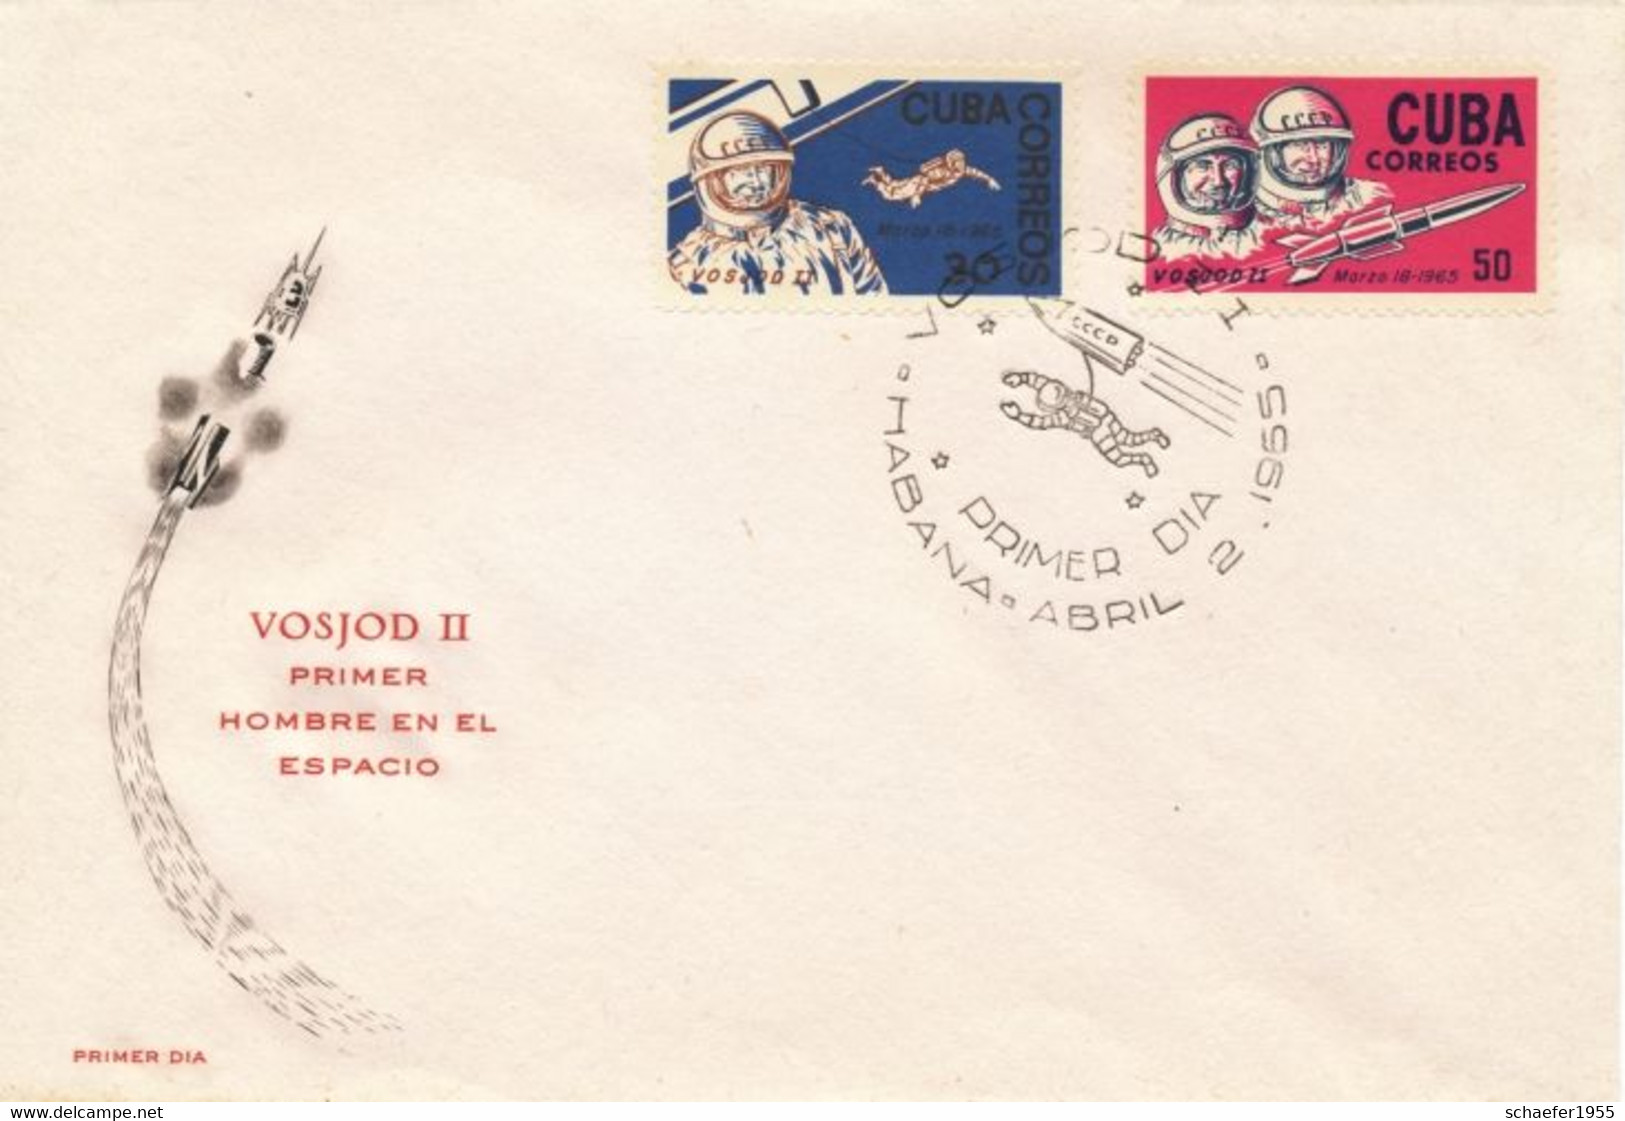 Cuba, Kuba 1965 FDC + Stamps VOSJOD II - América Del Norte